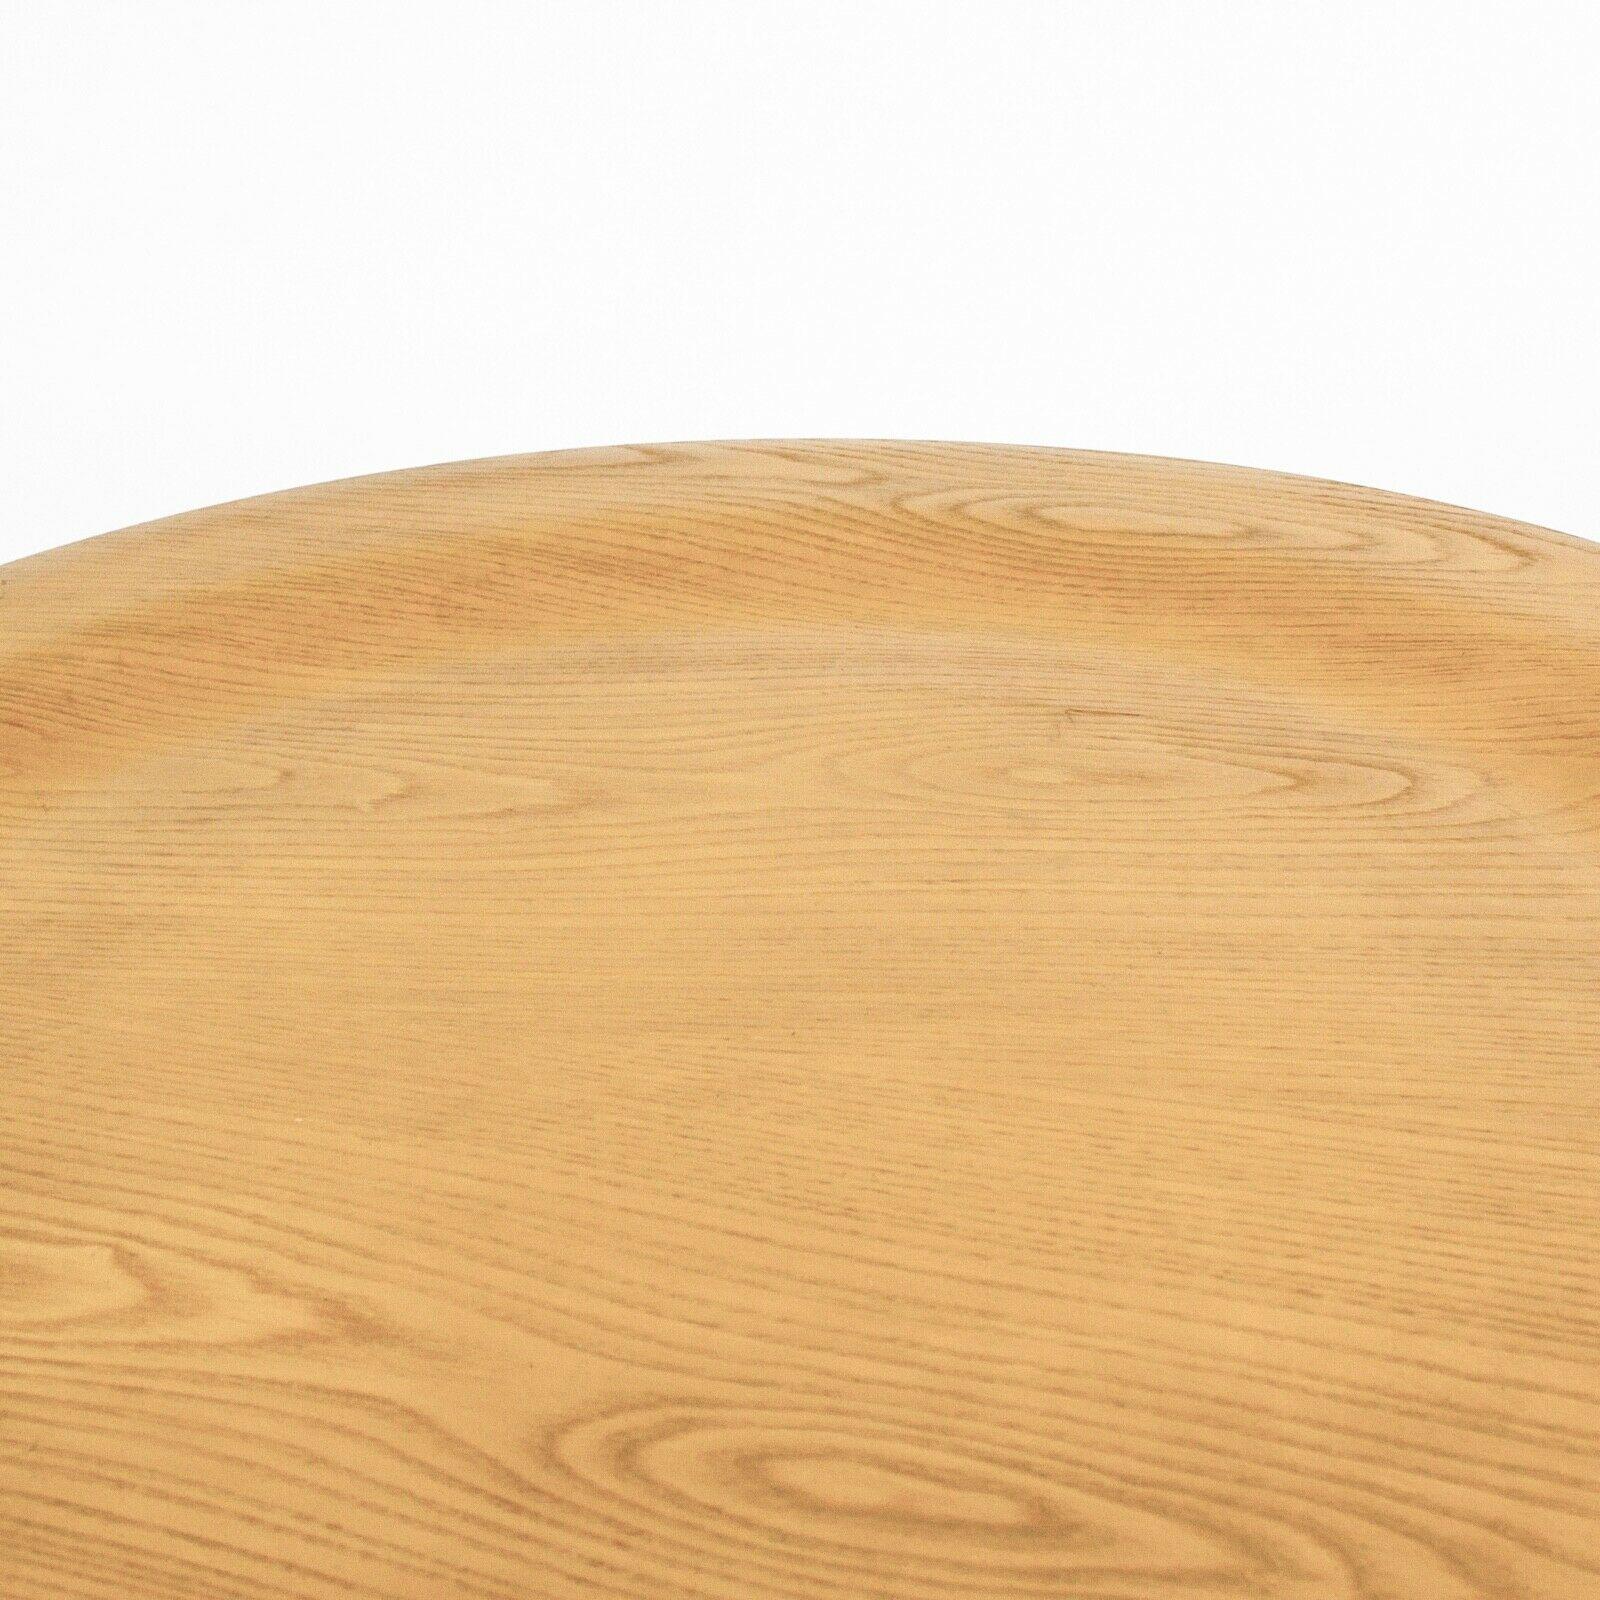 Bois 2006 Herman Miller Ray & Charles Eames CTW Round Coffee Table Wood in White Ash (Table basse ronde en bois en frêne blanc) en vente